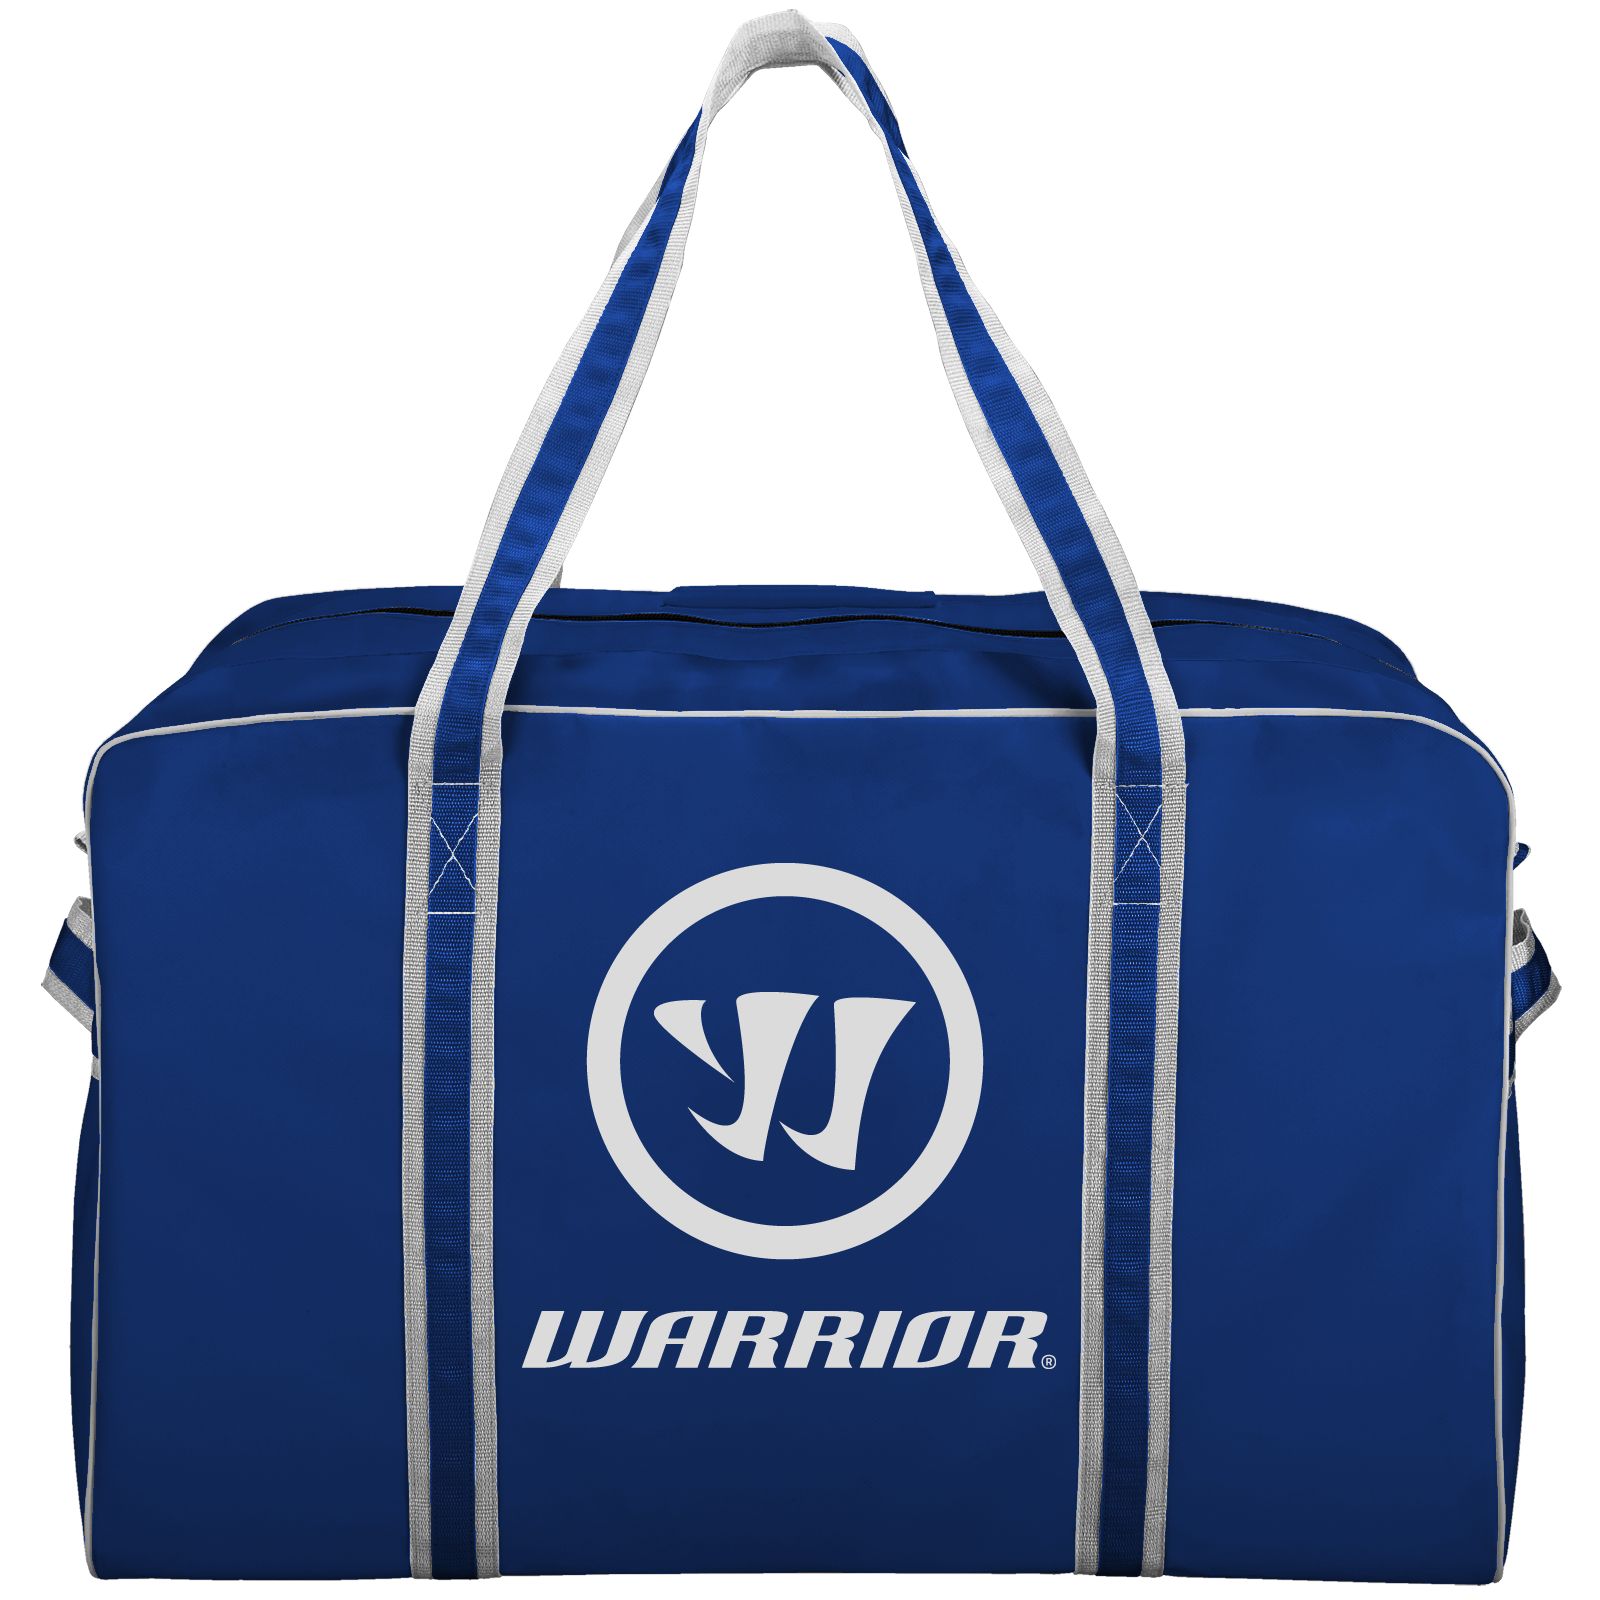 Warrior Pro Bag, Royal Blue with White image number 0